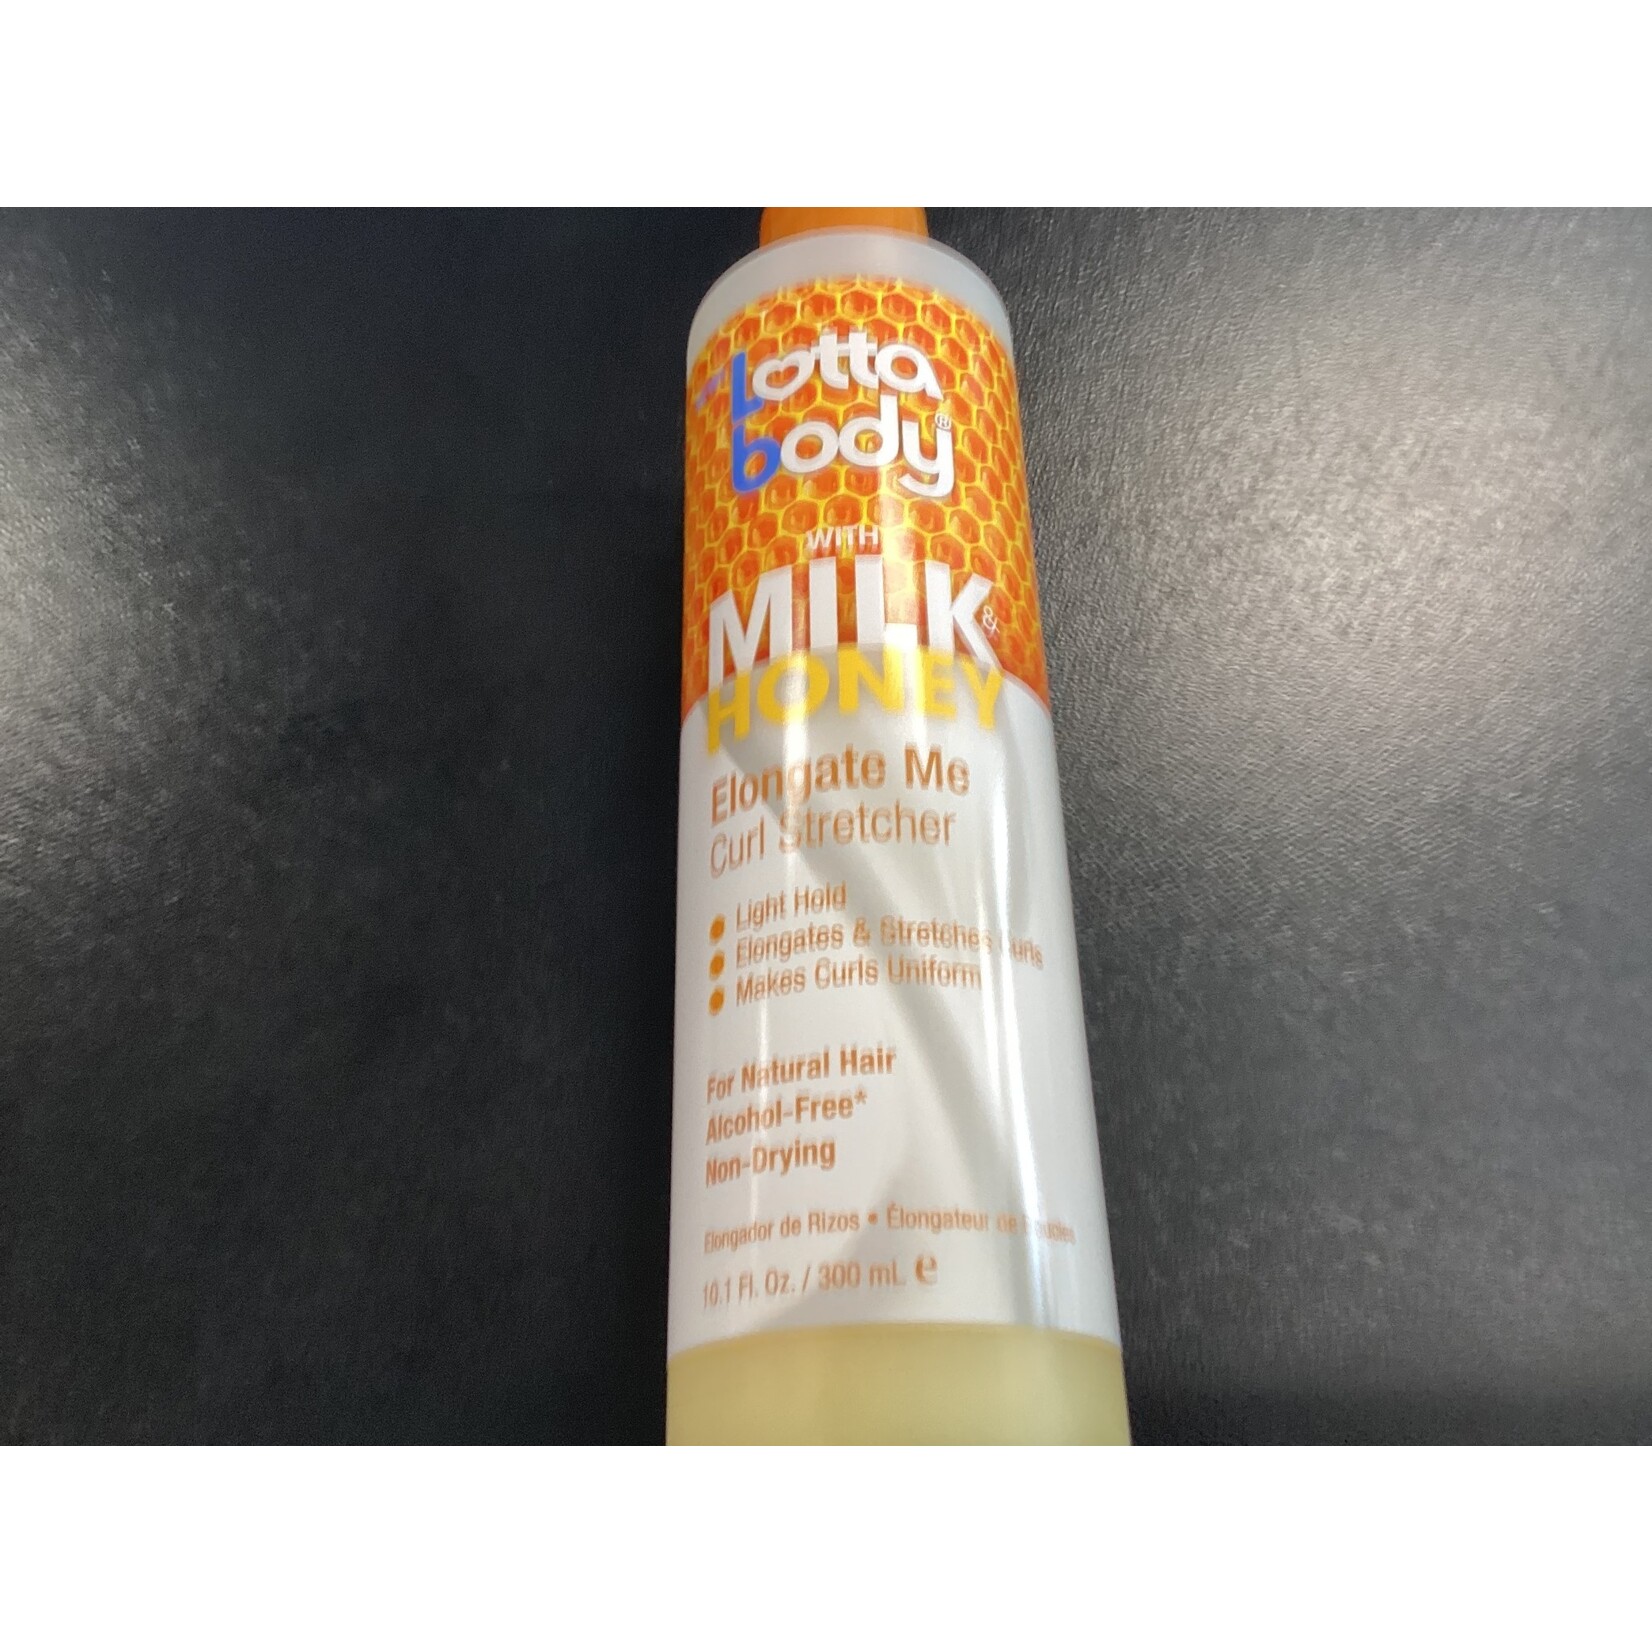 LottaBody Milk & Honey Elongate Me Curl Stretcher - 10.01 oz